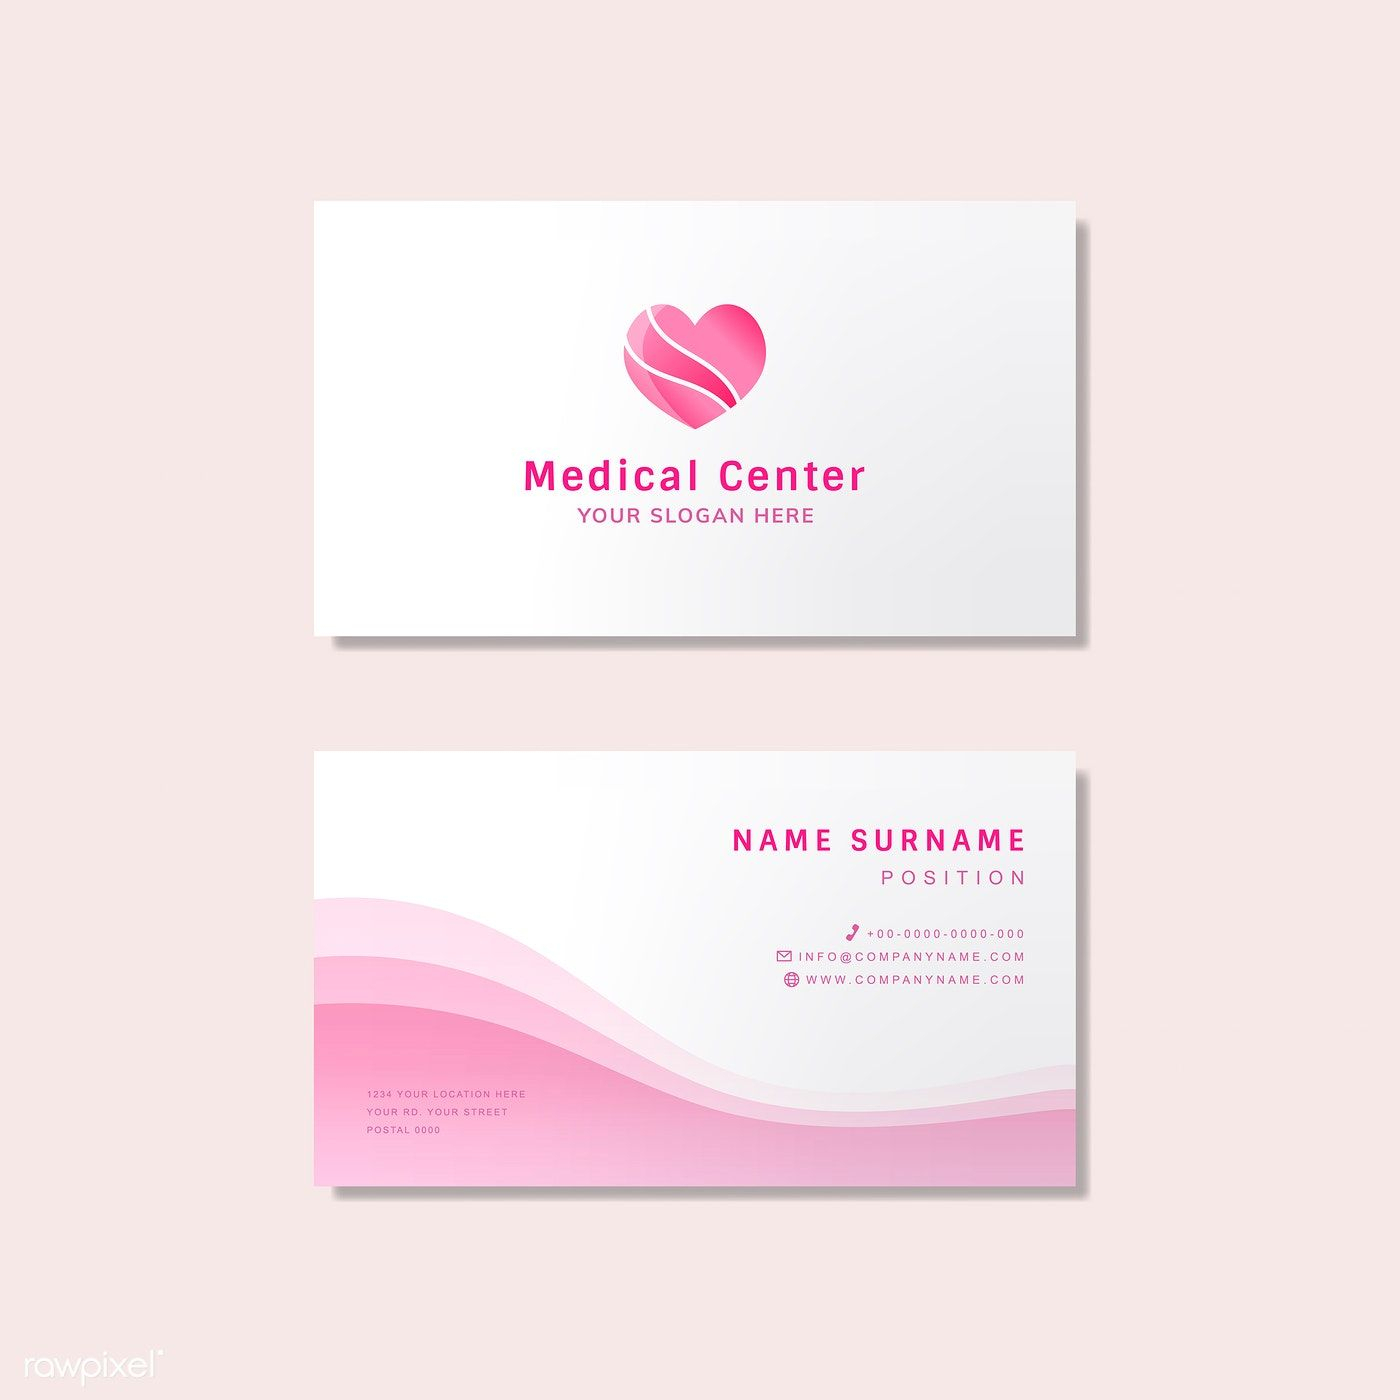 Medical Professional Business Card Design Mockup | Free Inside Medical Business Cards Templates Free